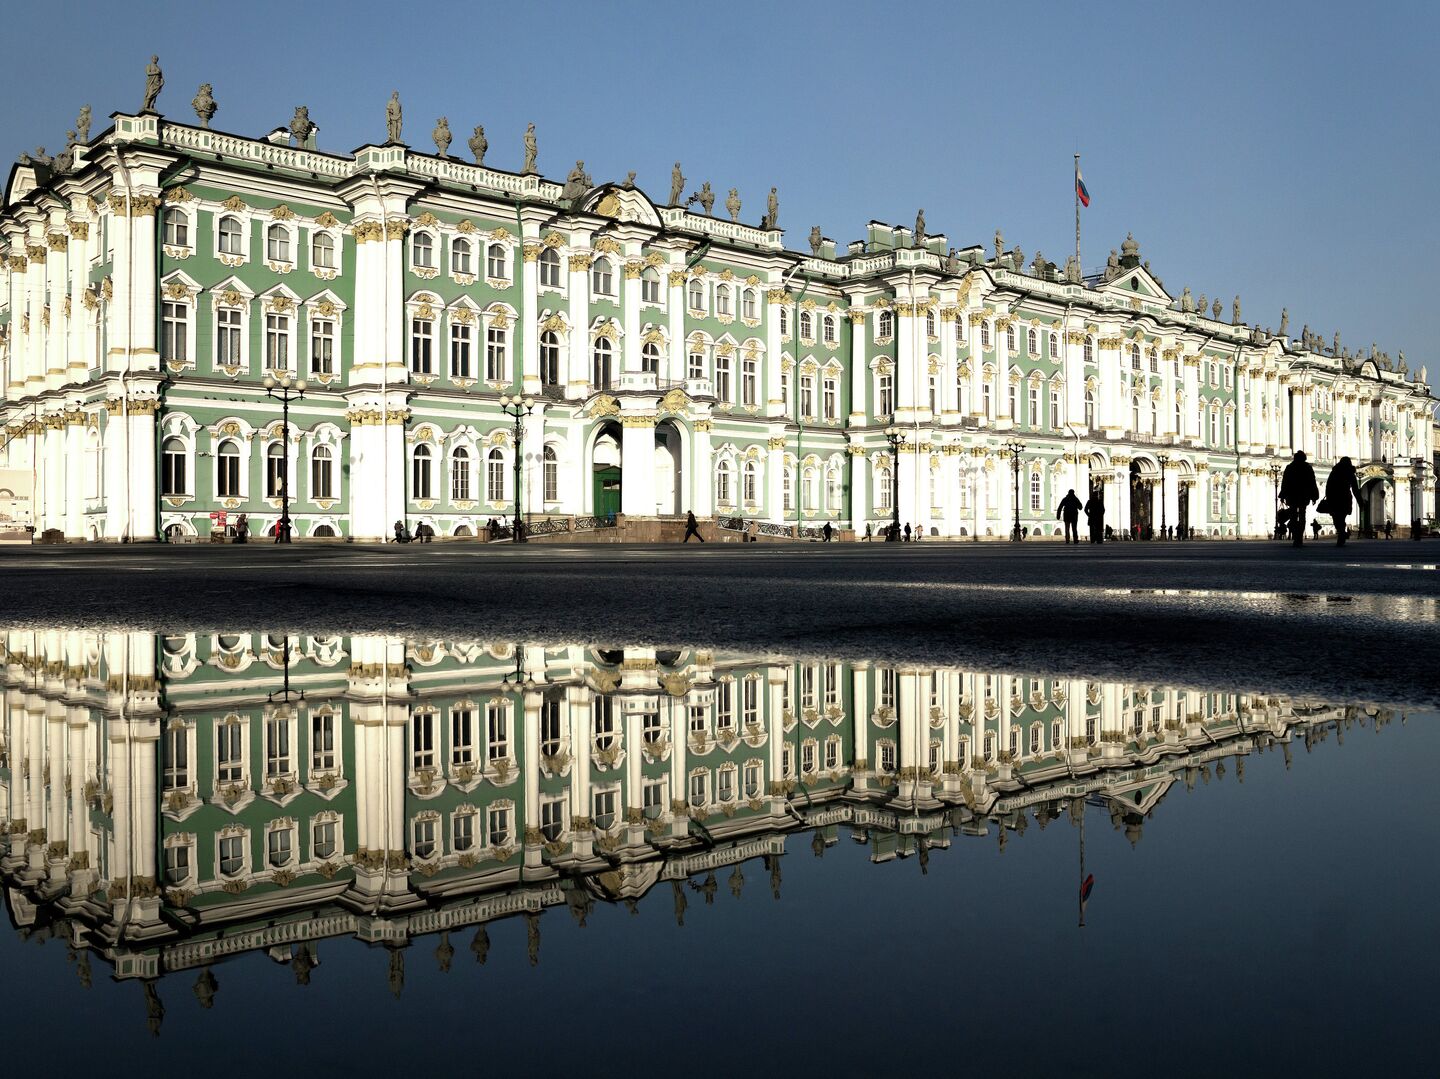 Музей Санкт-Петербург госуда́рственный Эрмита́ж